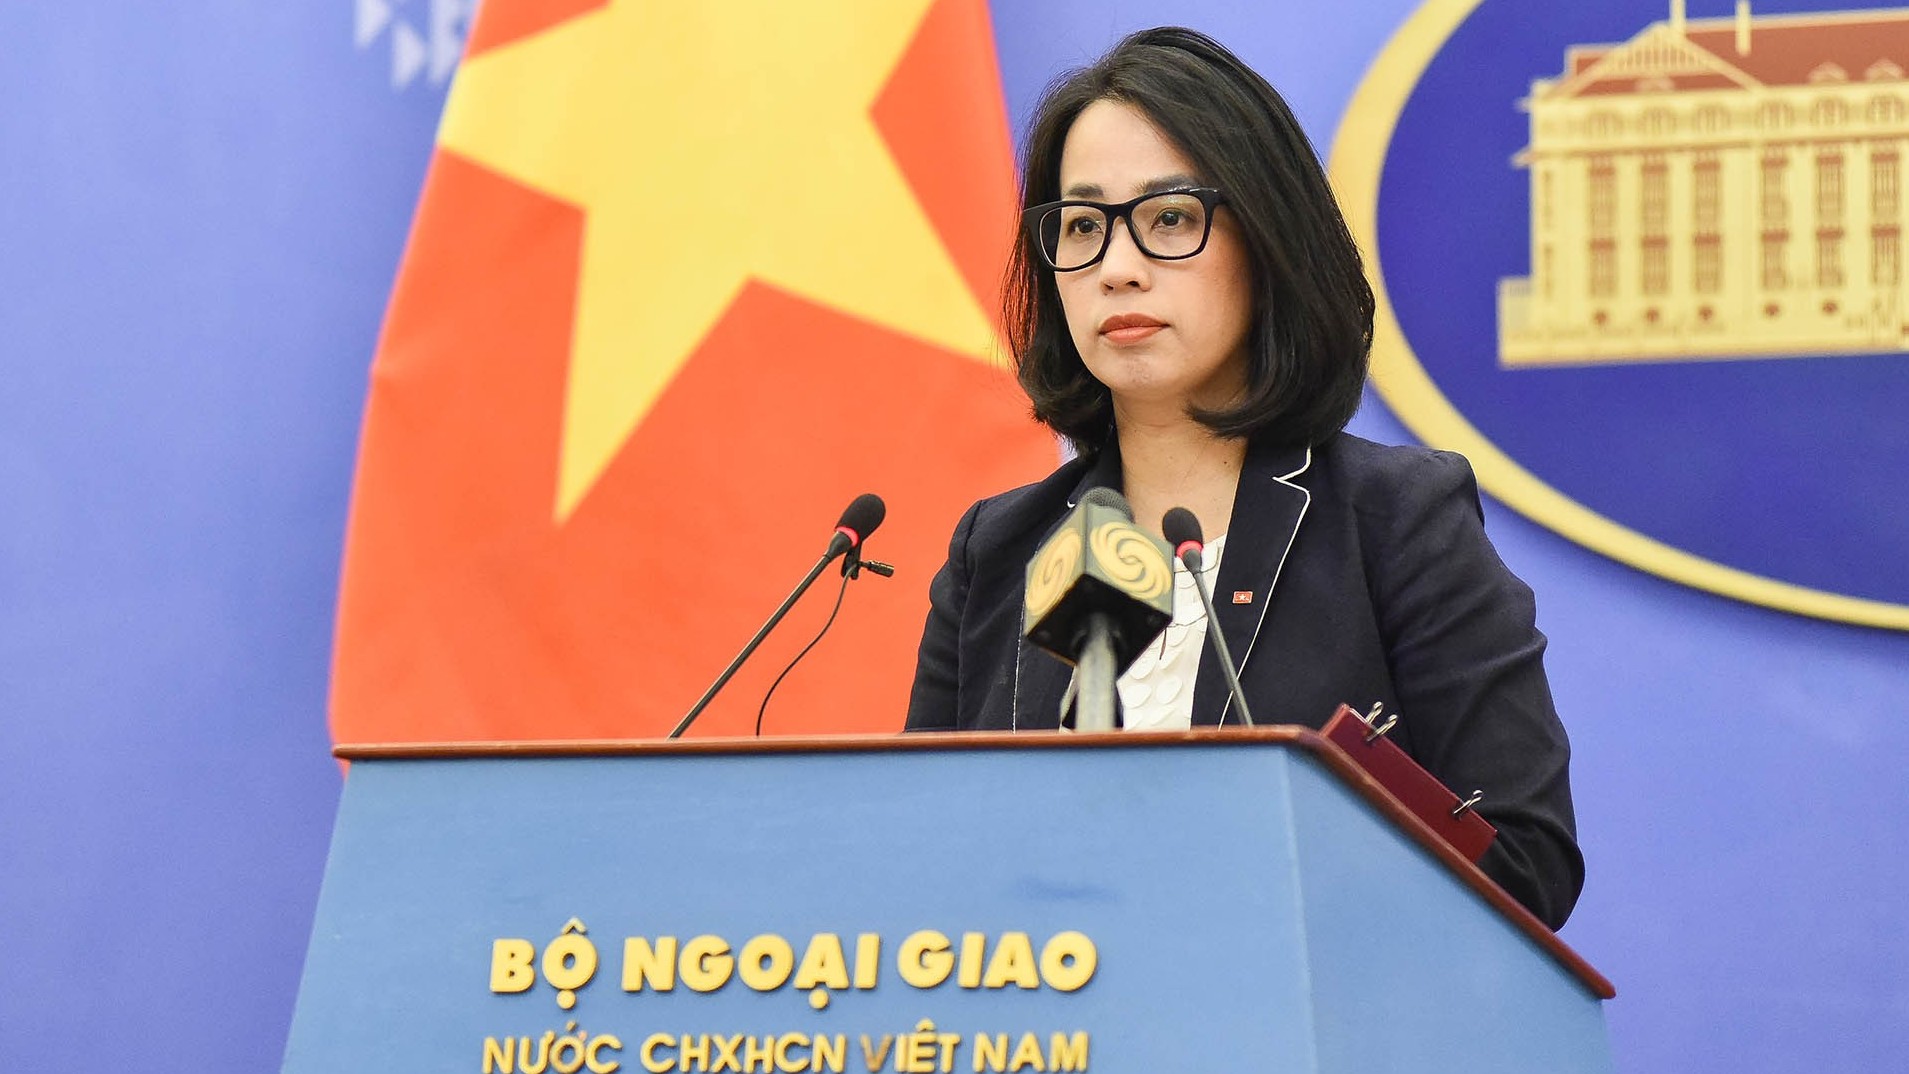 Japan invites Vietnam to G7 Summit: Deputy Spokesperson